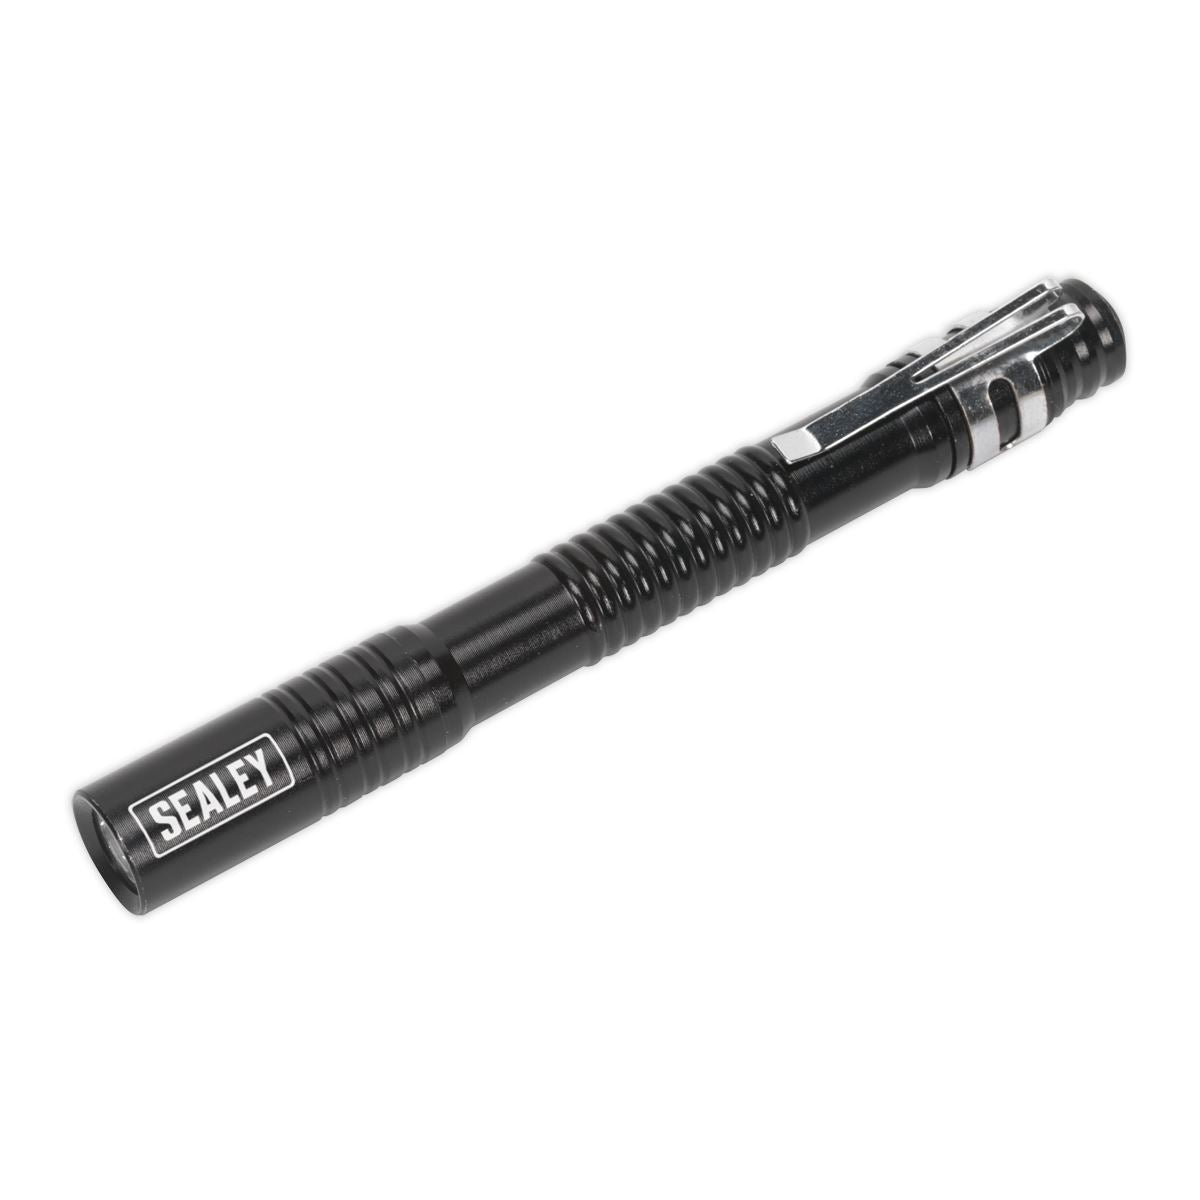 Sealey 0.5w LED Aluminium Pen Light Powerful Pocket-Sized Bright 50 Lumens